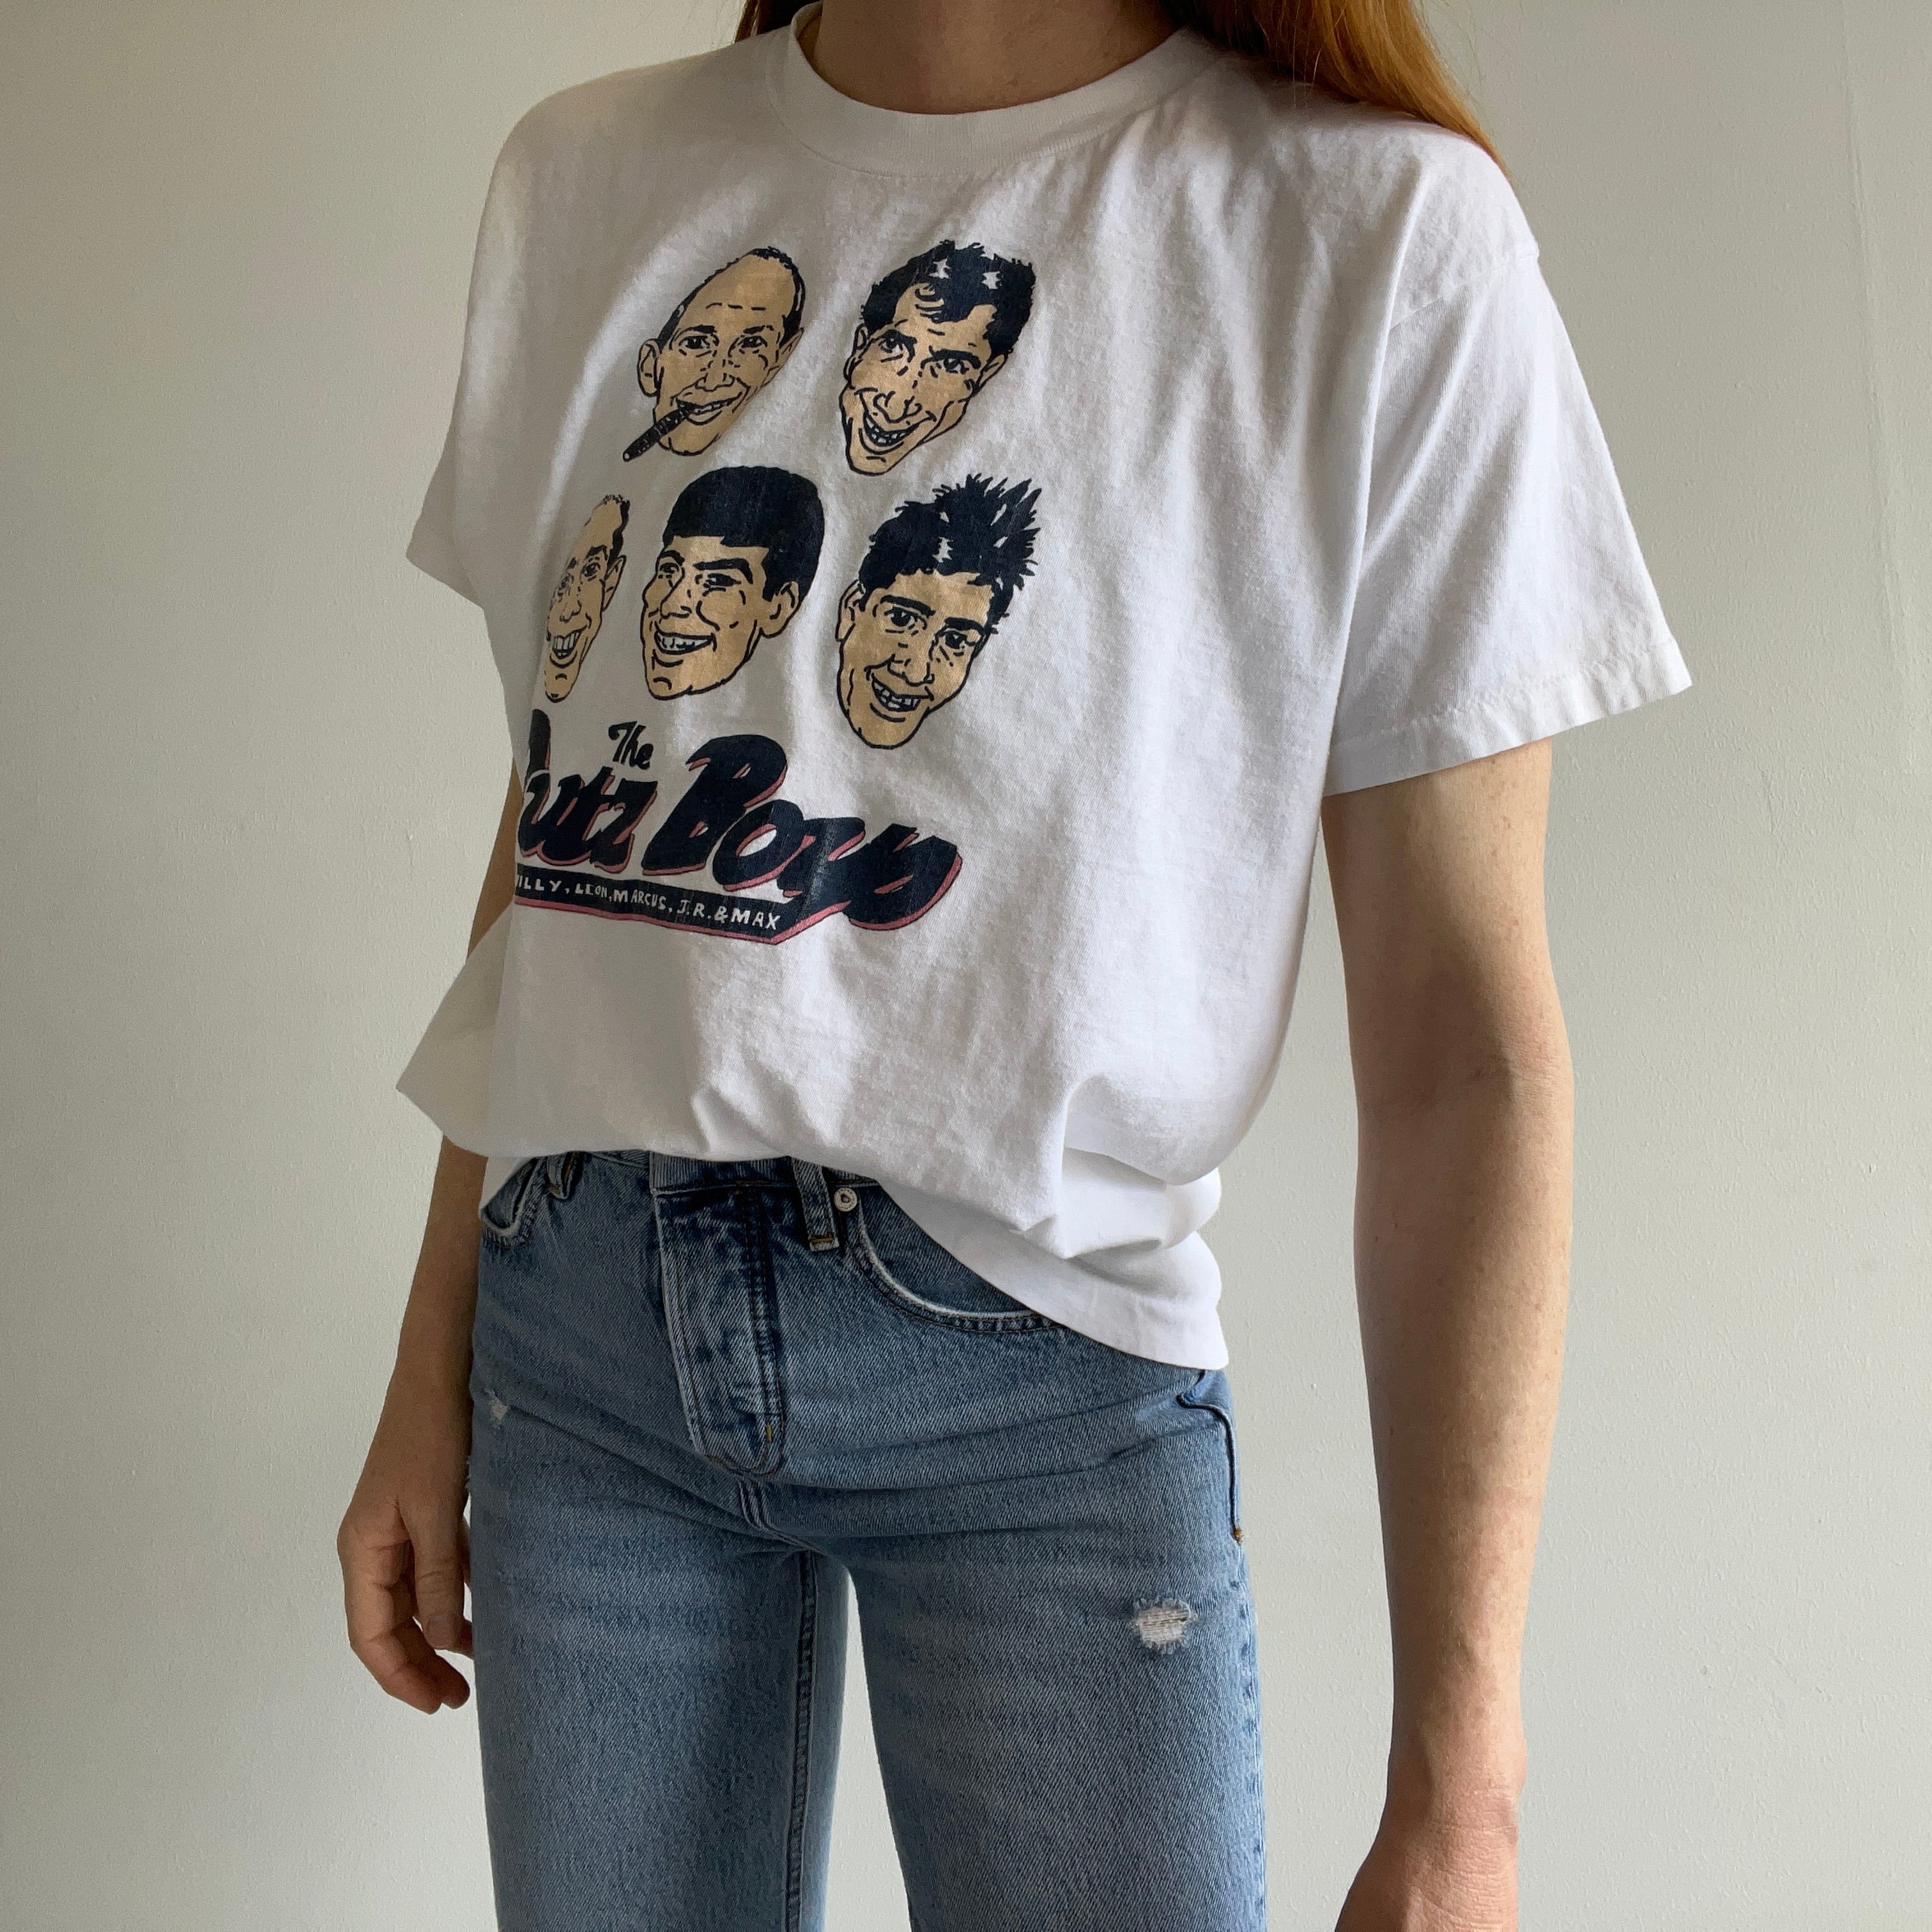 1980s Putz Boys, Not Pep, that's important, T-Shirt